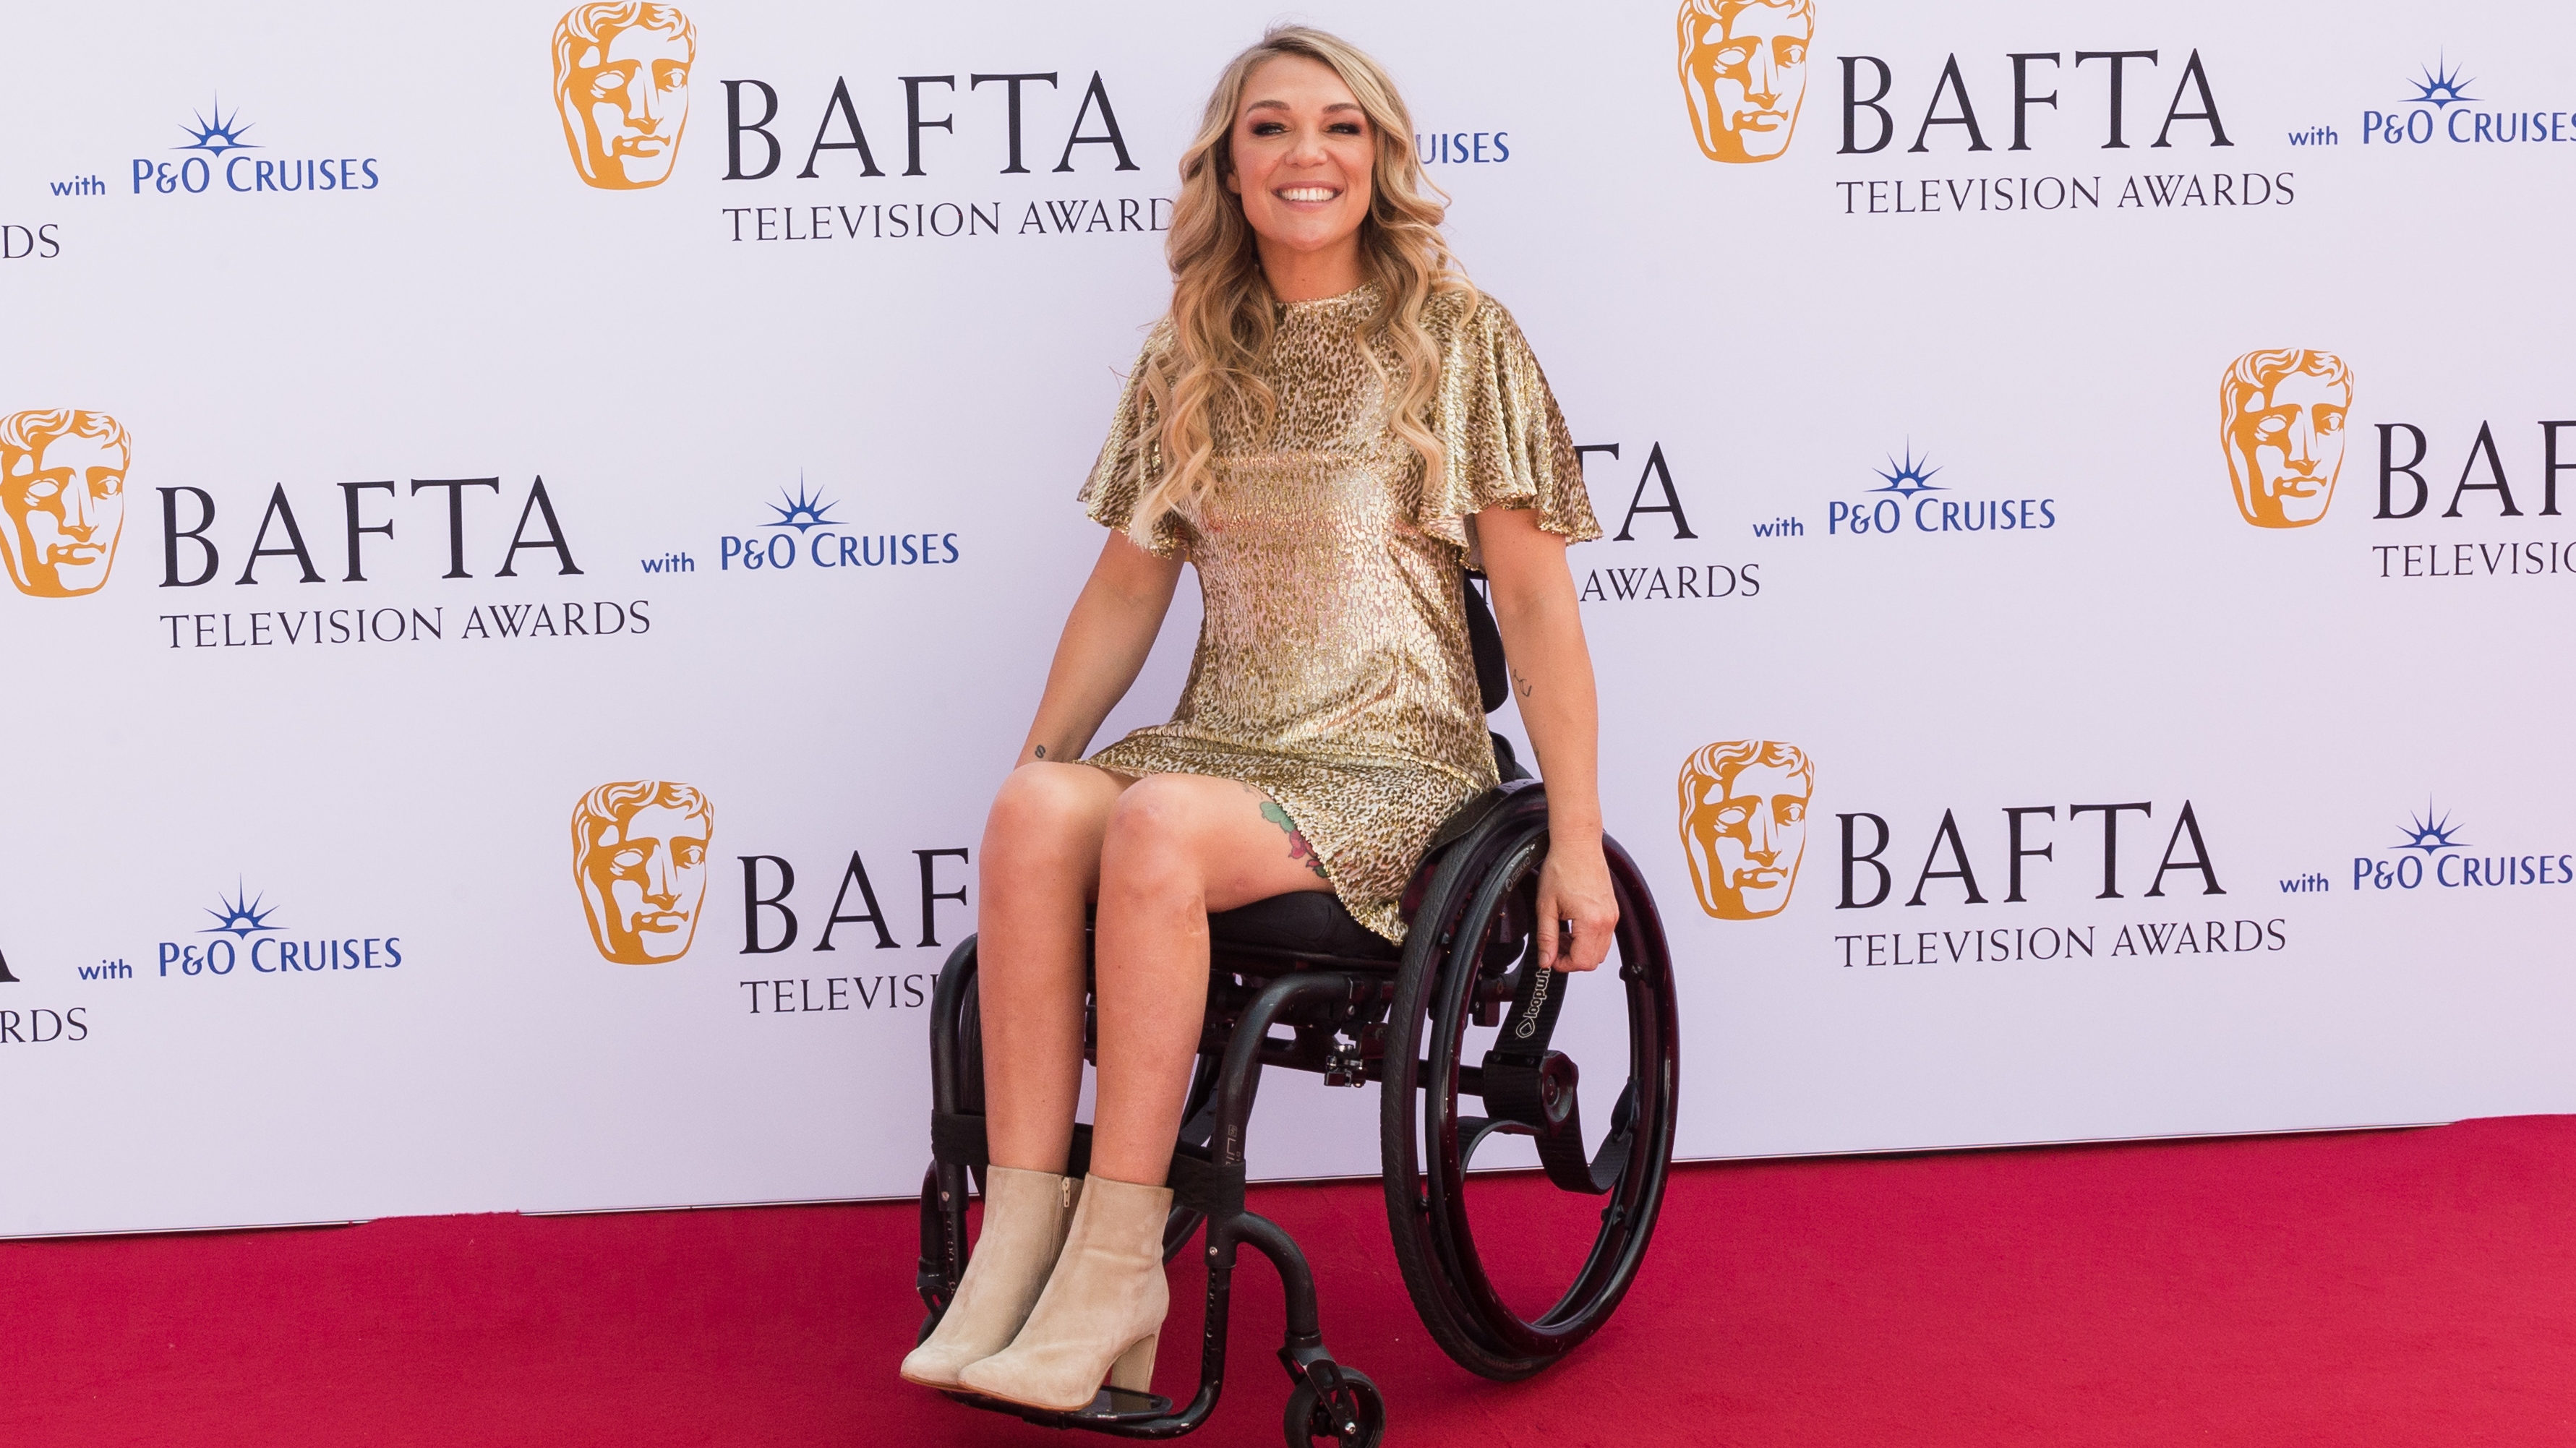 Sophie Morgan attends the BAFTA Television Awards